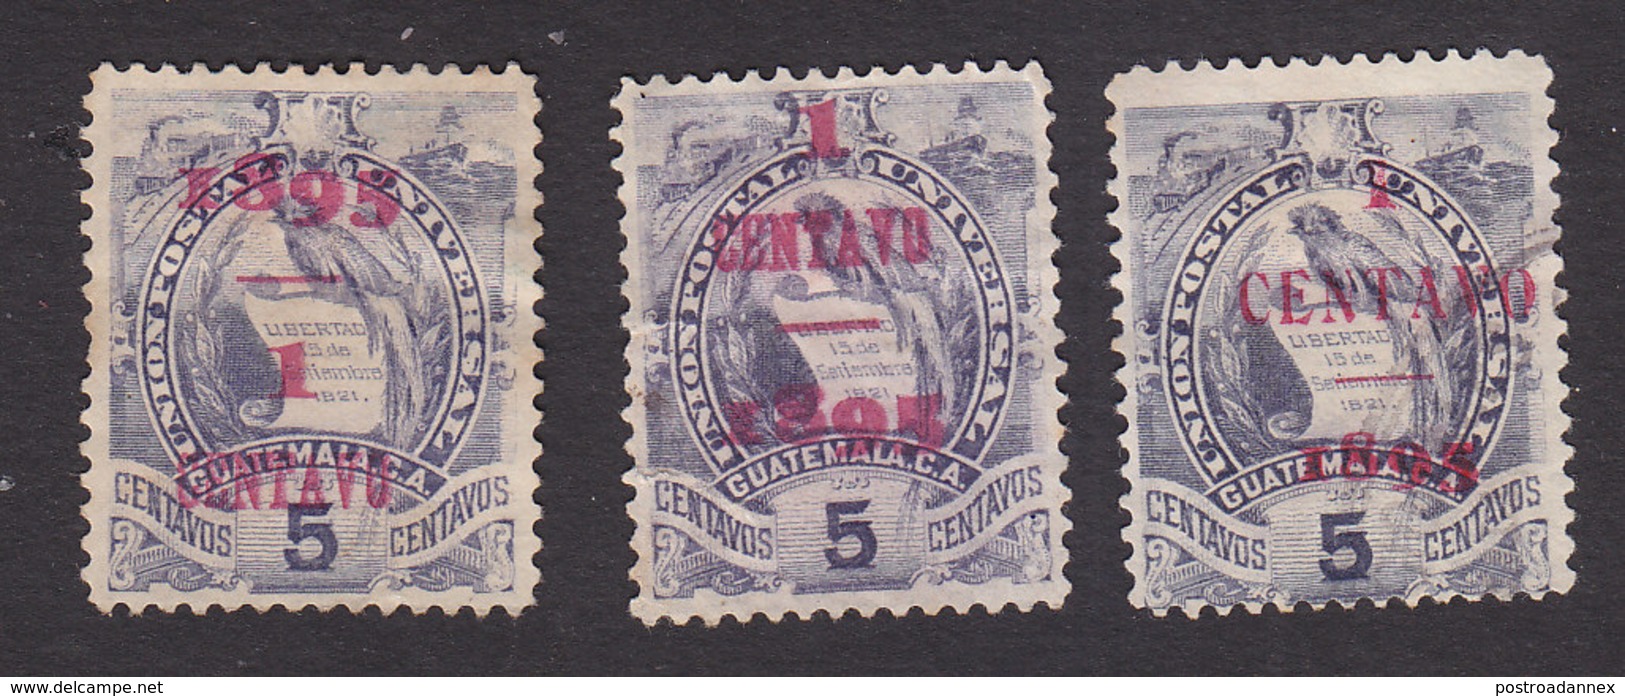 Guatemala, Scott #57-59, Mint No Gum, National Emblem Surcharged, Issued 1894 - Guatemala